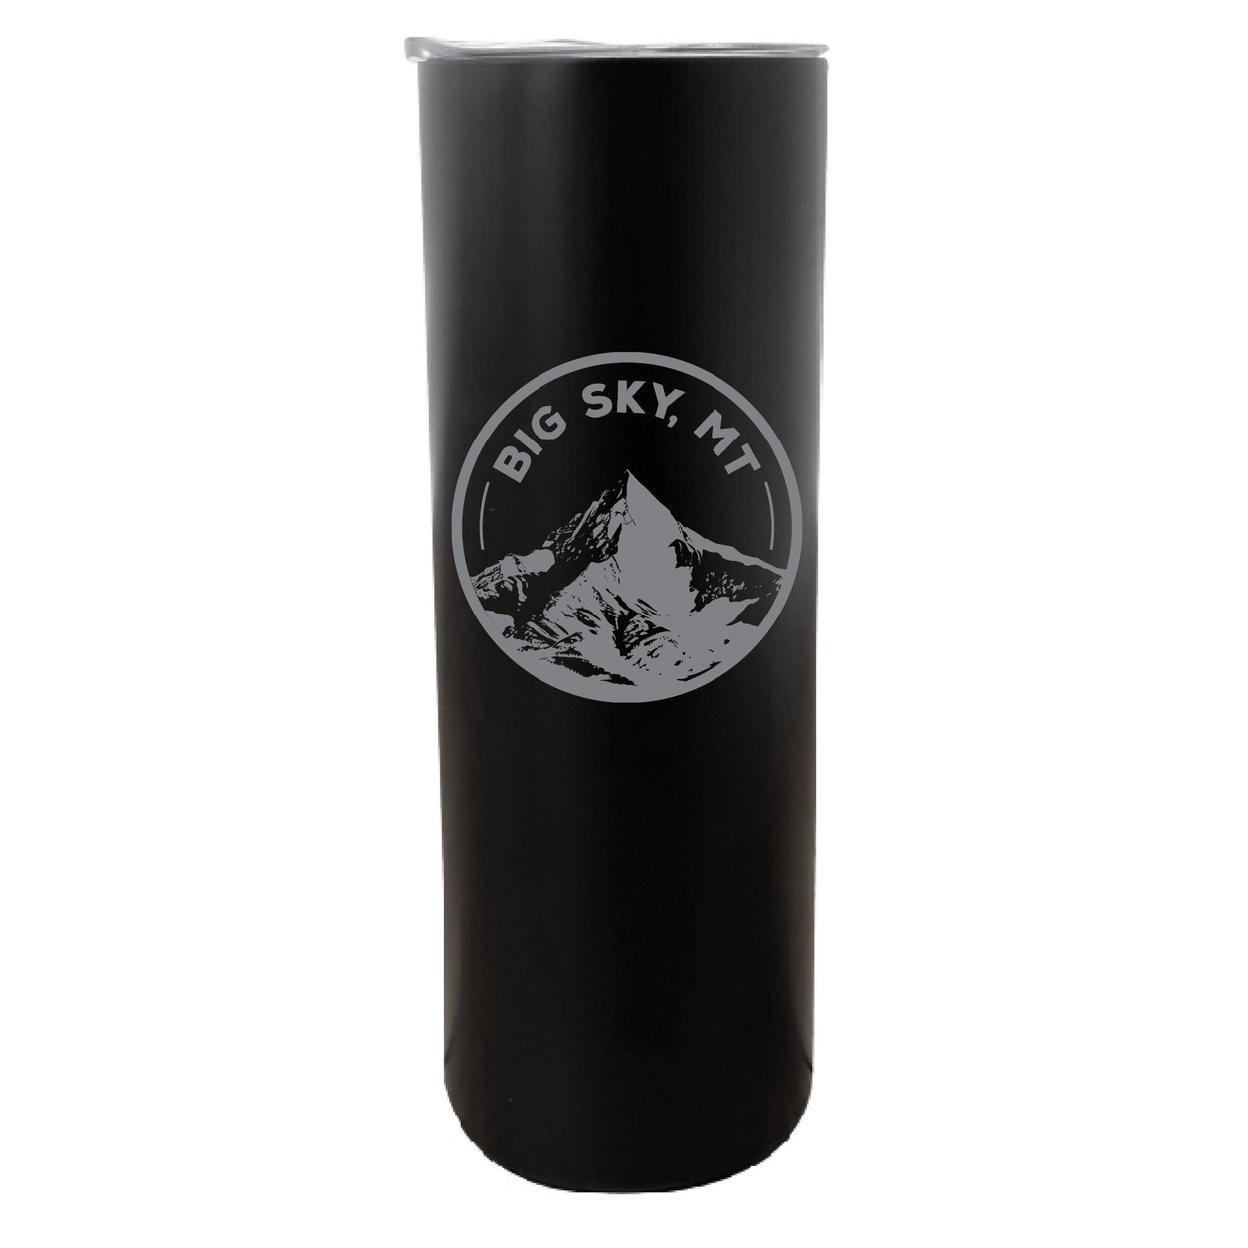 Big Sky Montana Souvenir 20 Oz Engraved Insulated Stainless Steel Skinny Tumbler - Black,,4-Pack